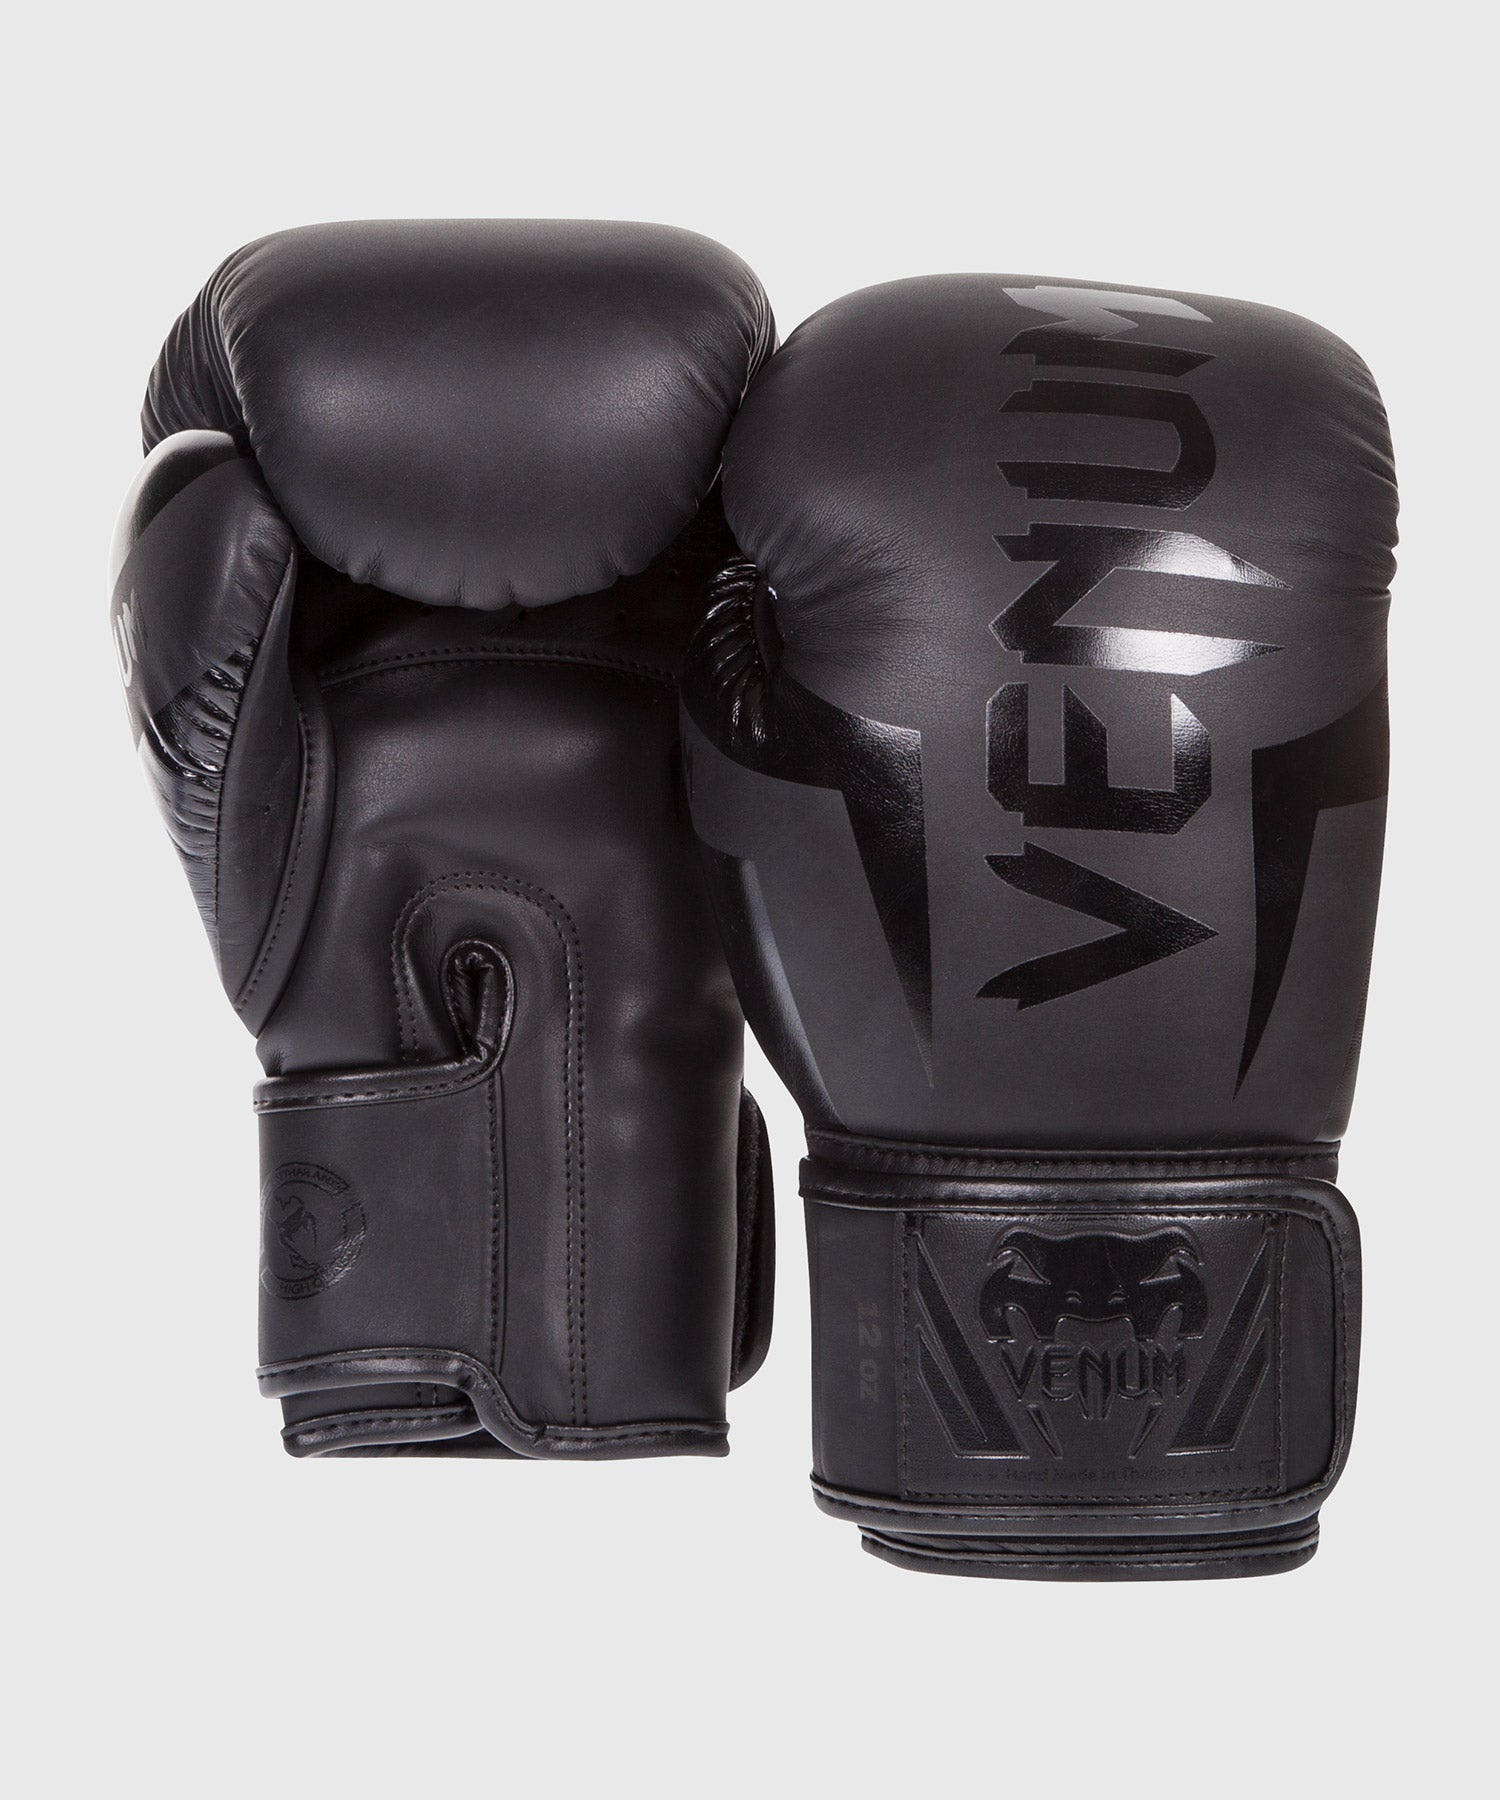 Venum Elite Boxing Gloves - Black 16 oz